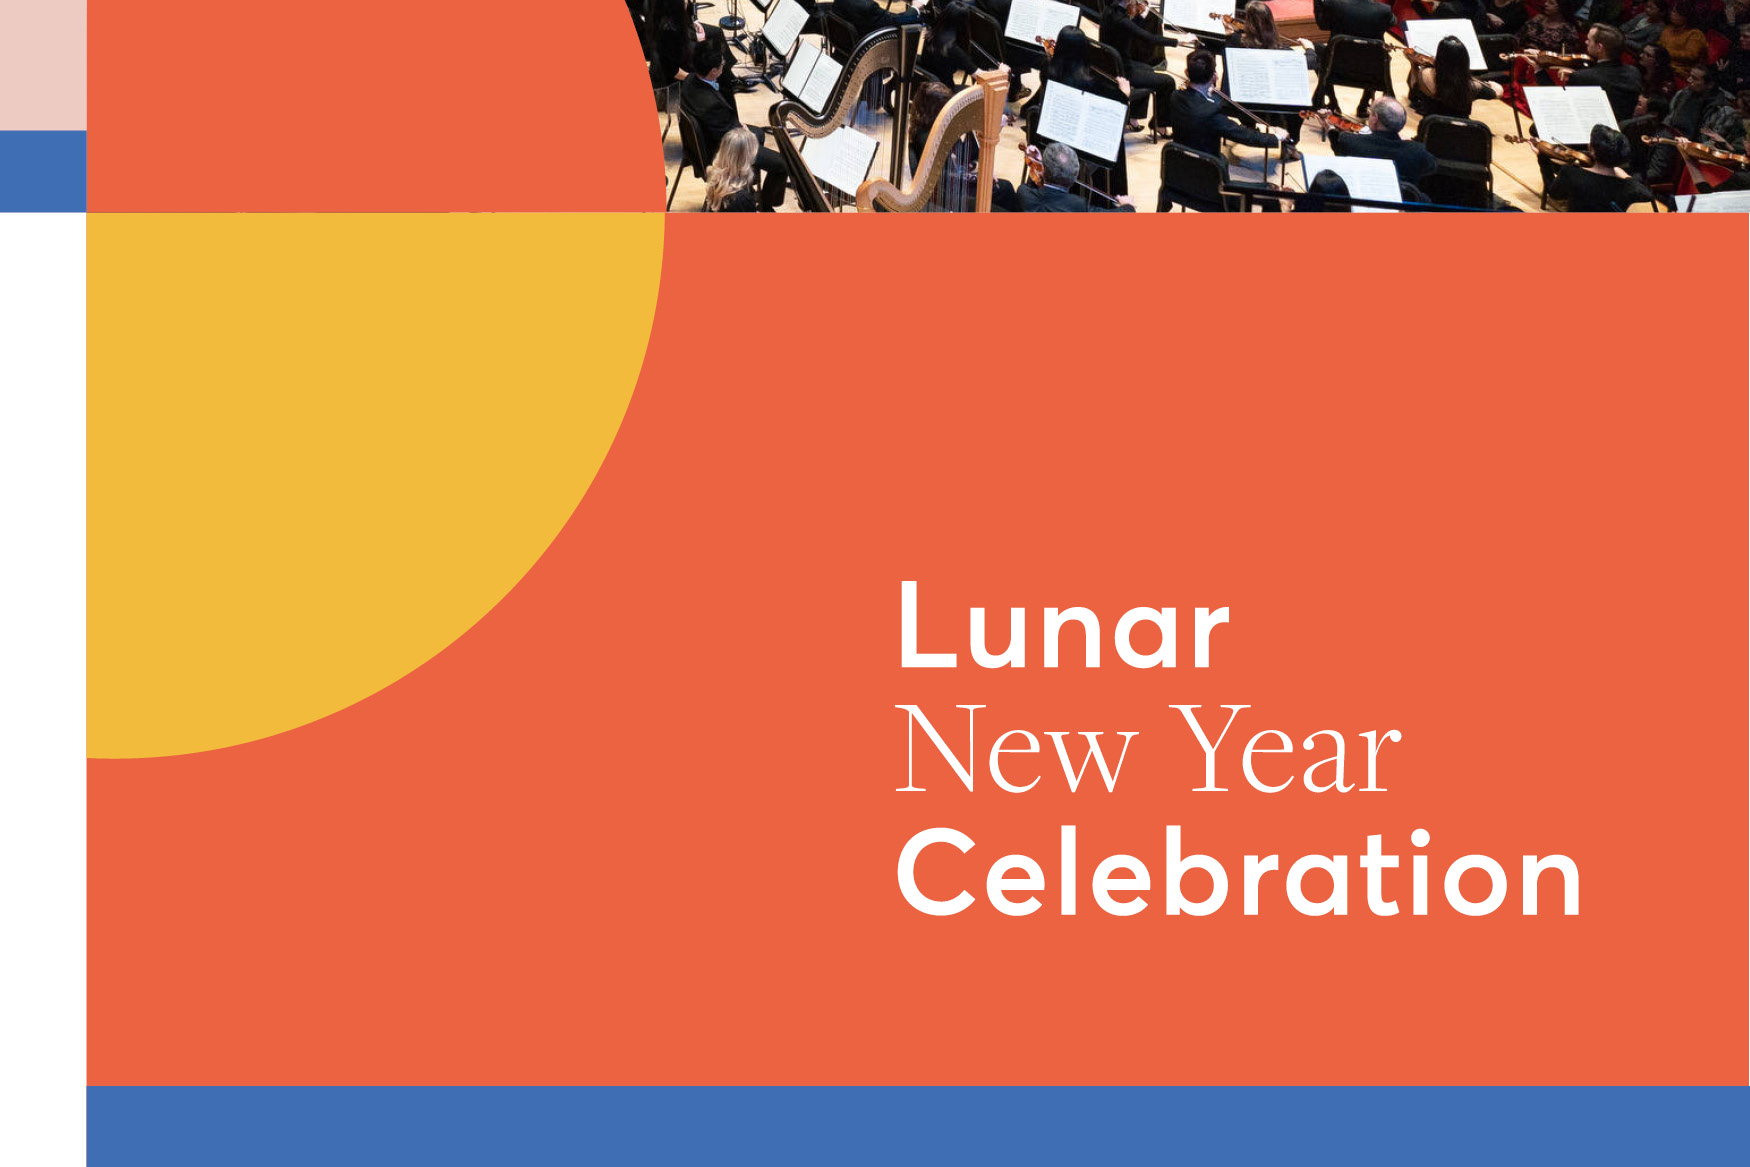 Lunar New Year Celebration Concert